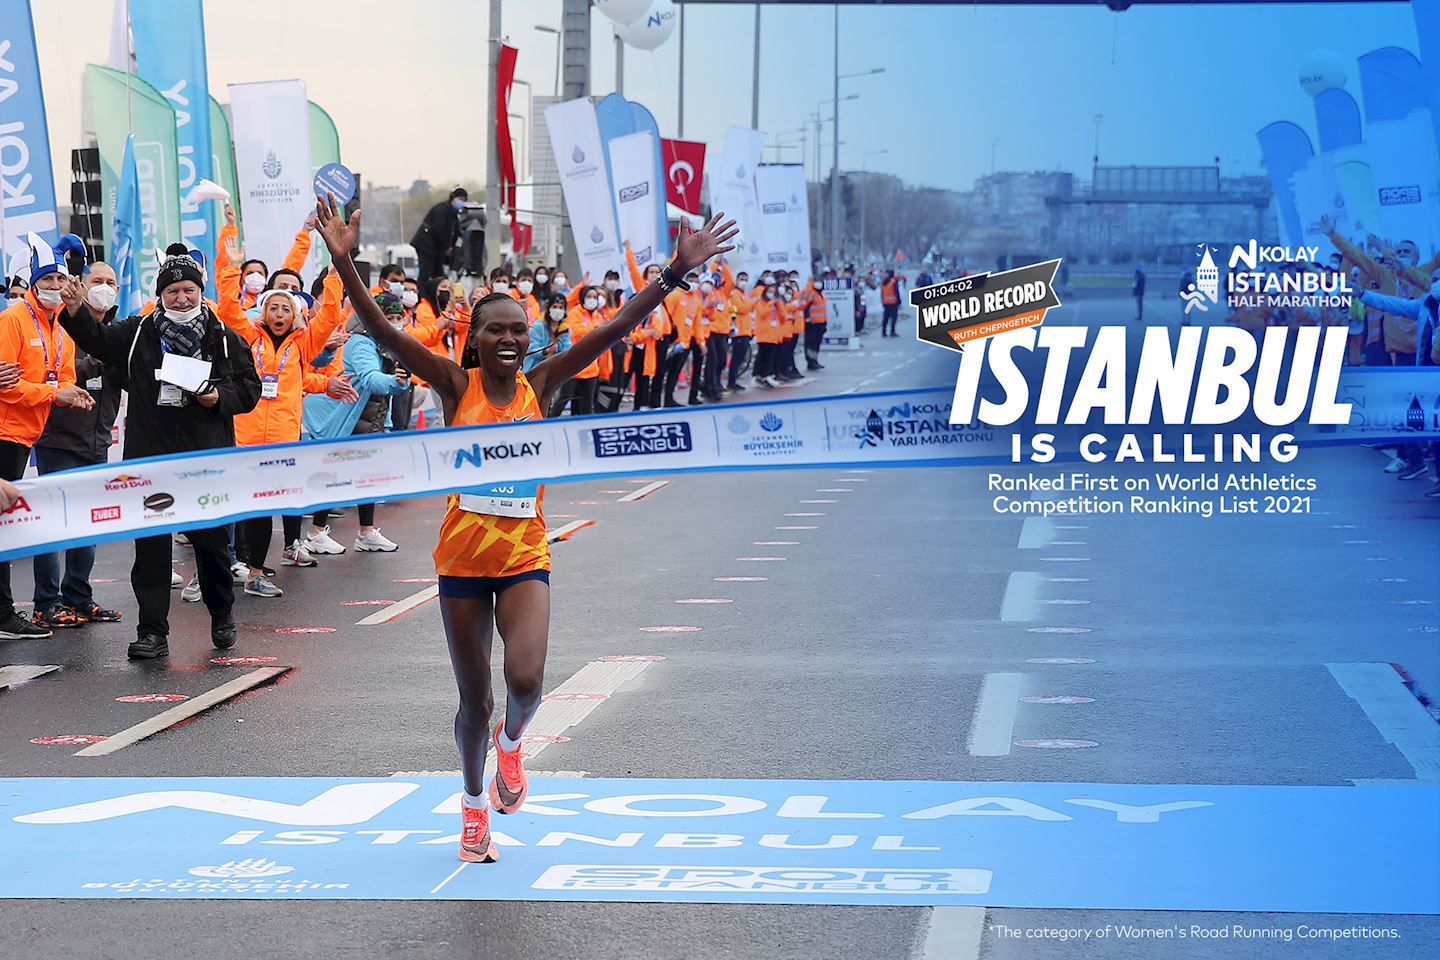 Half Marathon Calendar 2022 N Kolay Istanbul Half Marathon, Mar 27 2022 | World's Marathons